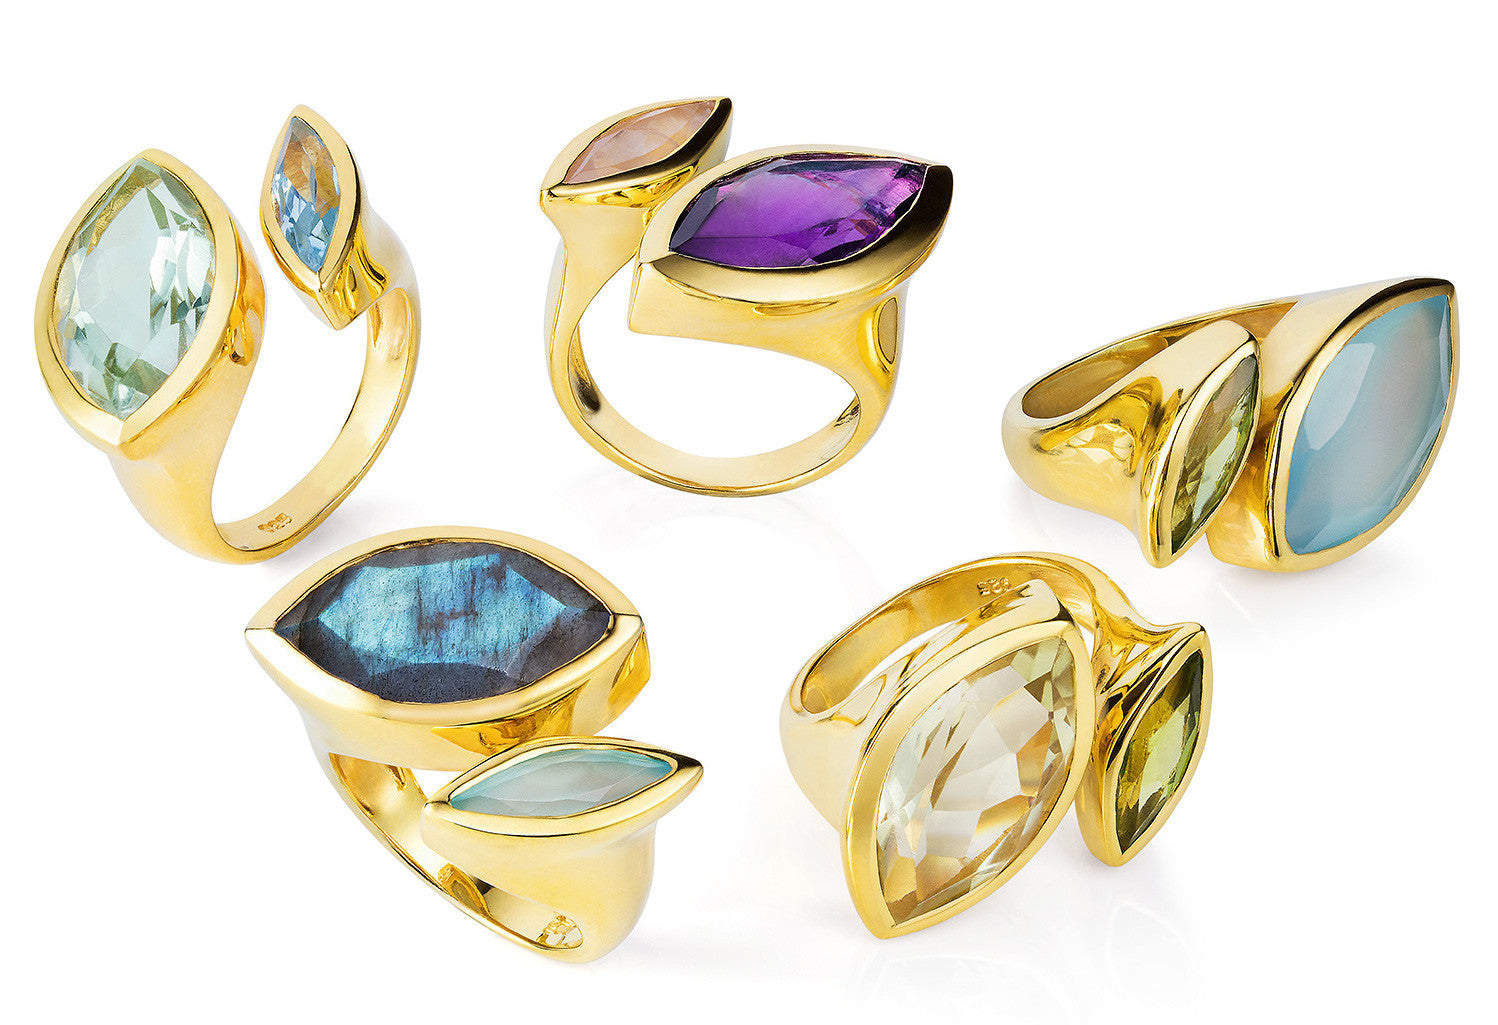 Different Gold Vermeil Rings, Citrine and Aqua Chalcedony gemstones, minimalist, geometric design